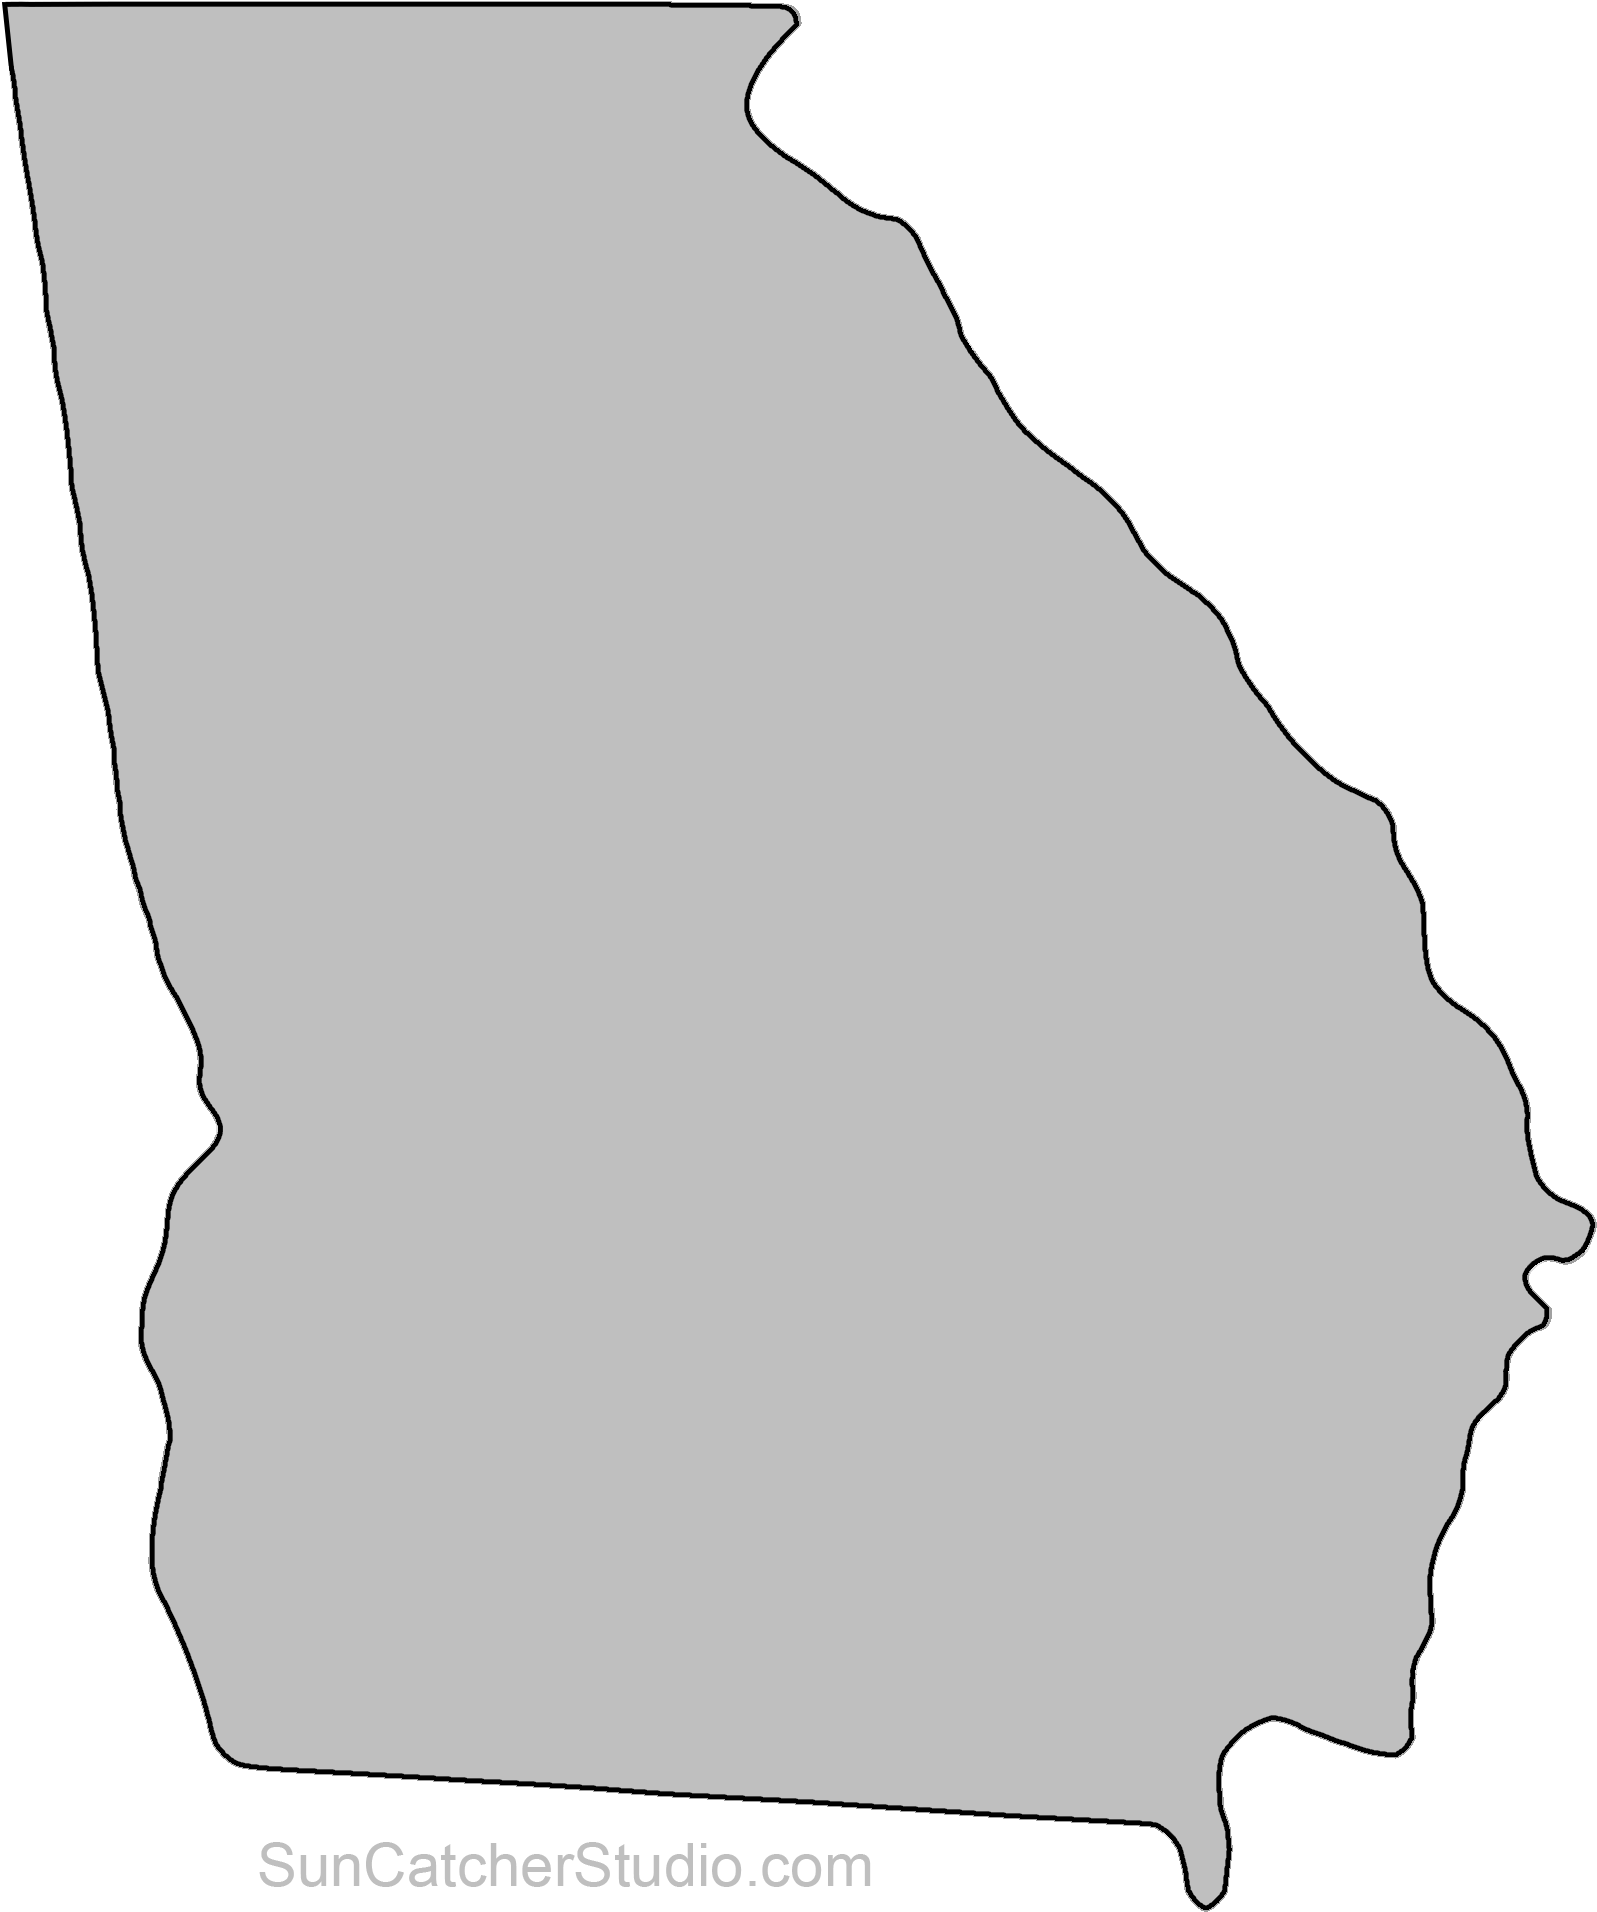 Georgia State Outline